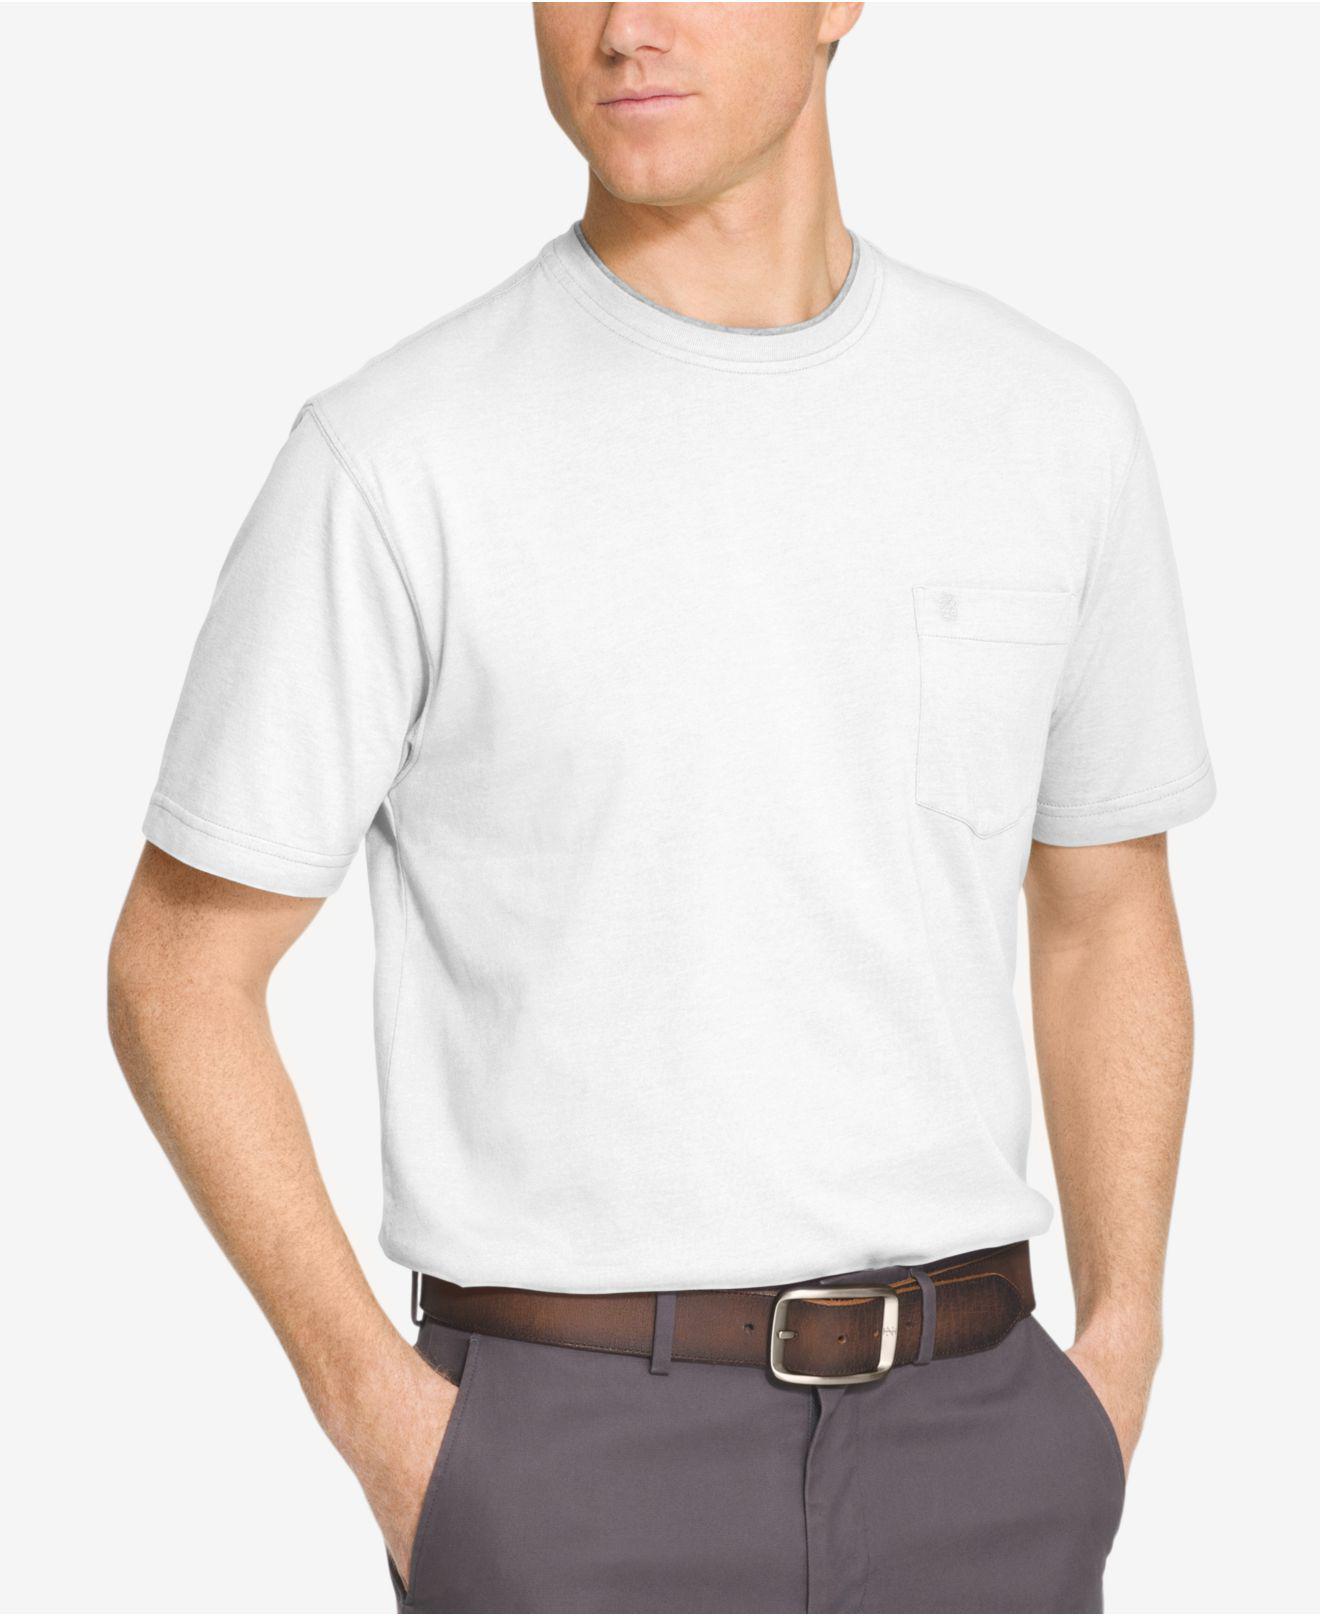 Lyst - Izod Men's Double Layer Pocket T-shirt in White for Men